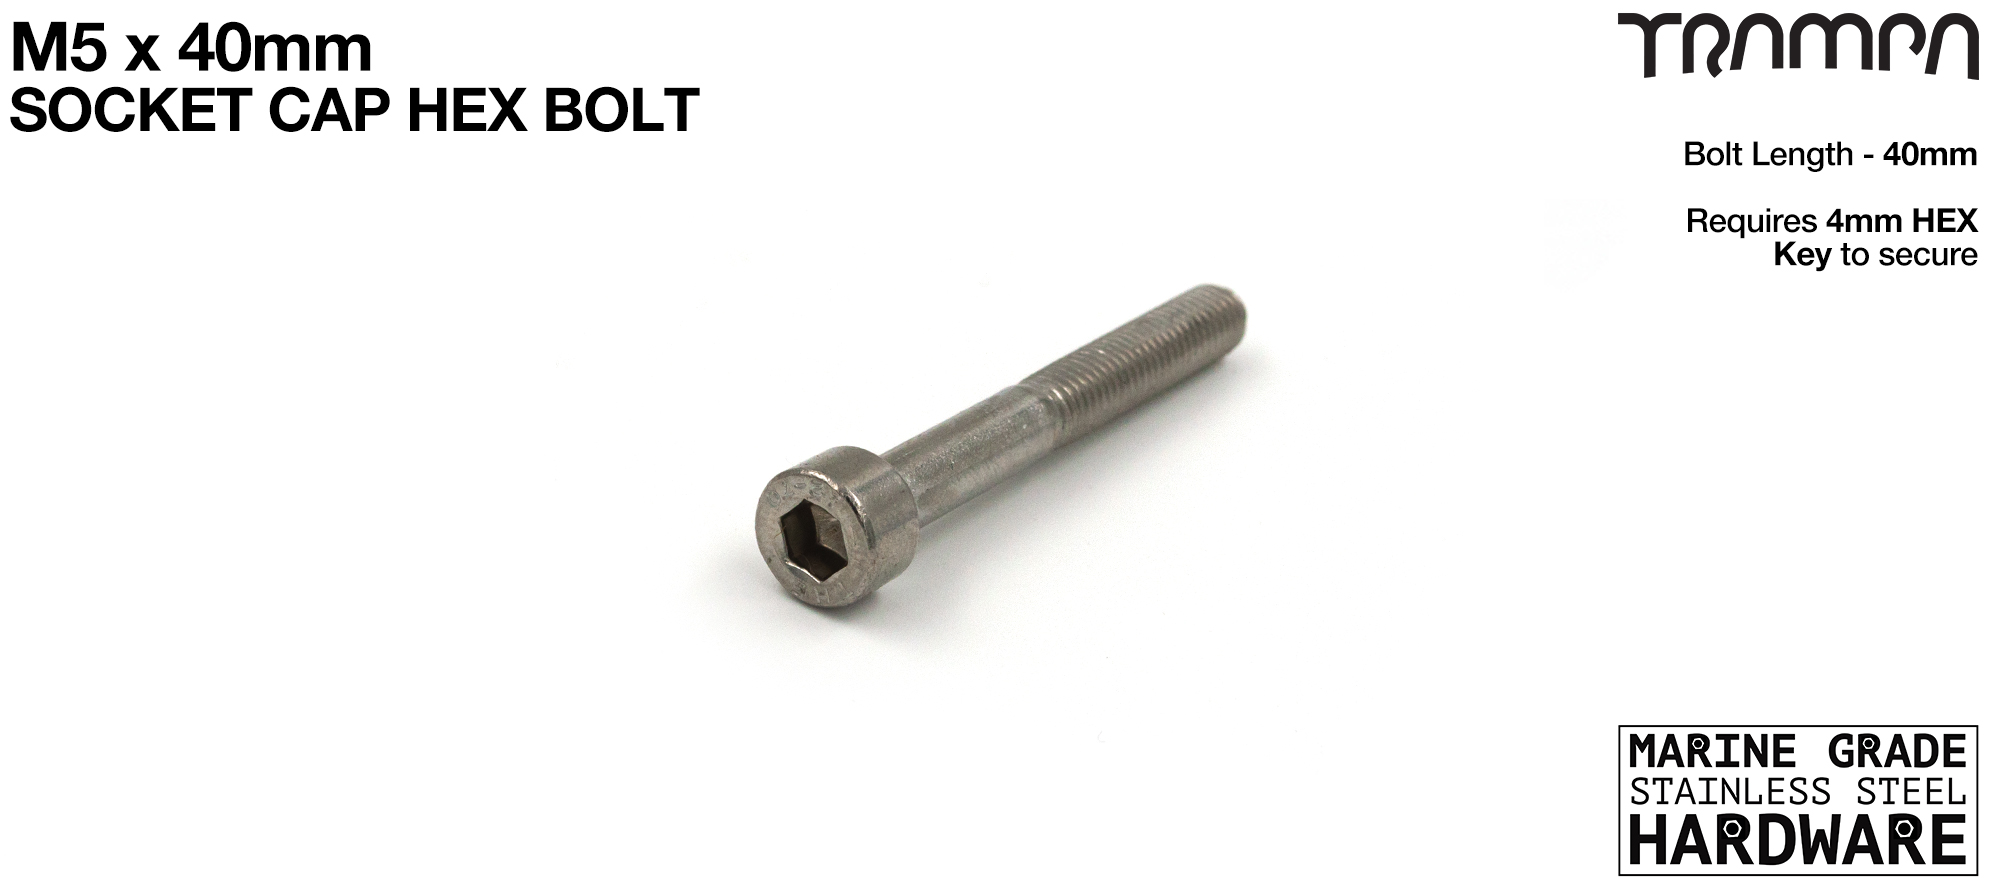 M5 x 40mm Socket Capped Head Allen-Key Bolt ISO 4762 Marine Grade Stainless Steel 